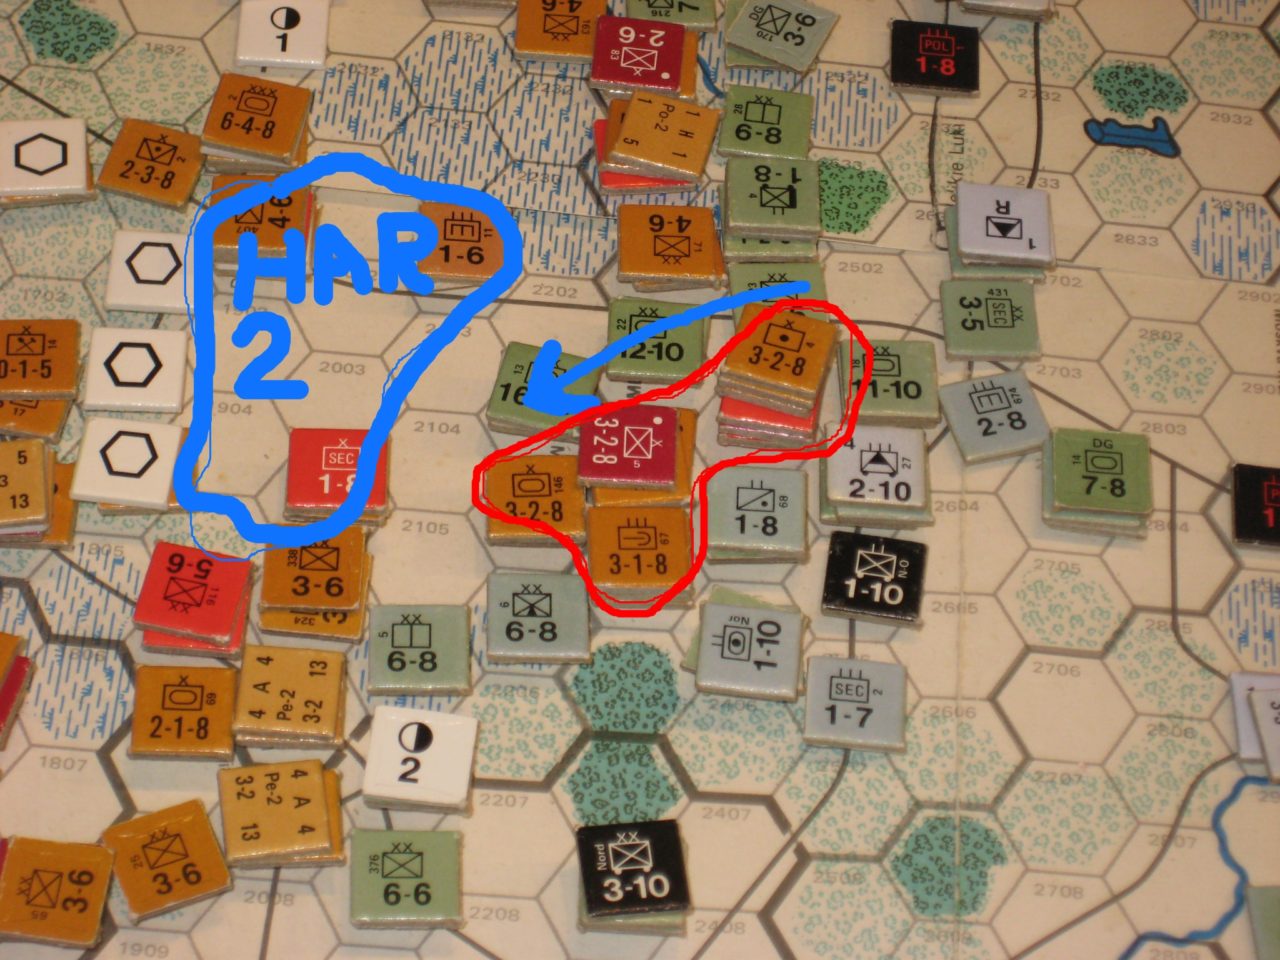 Axis counterstroke south of Leningrad